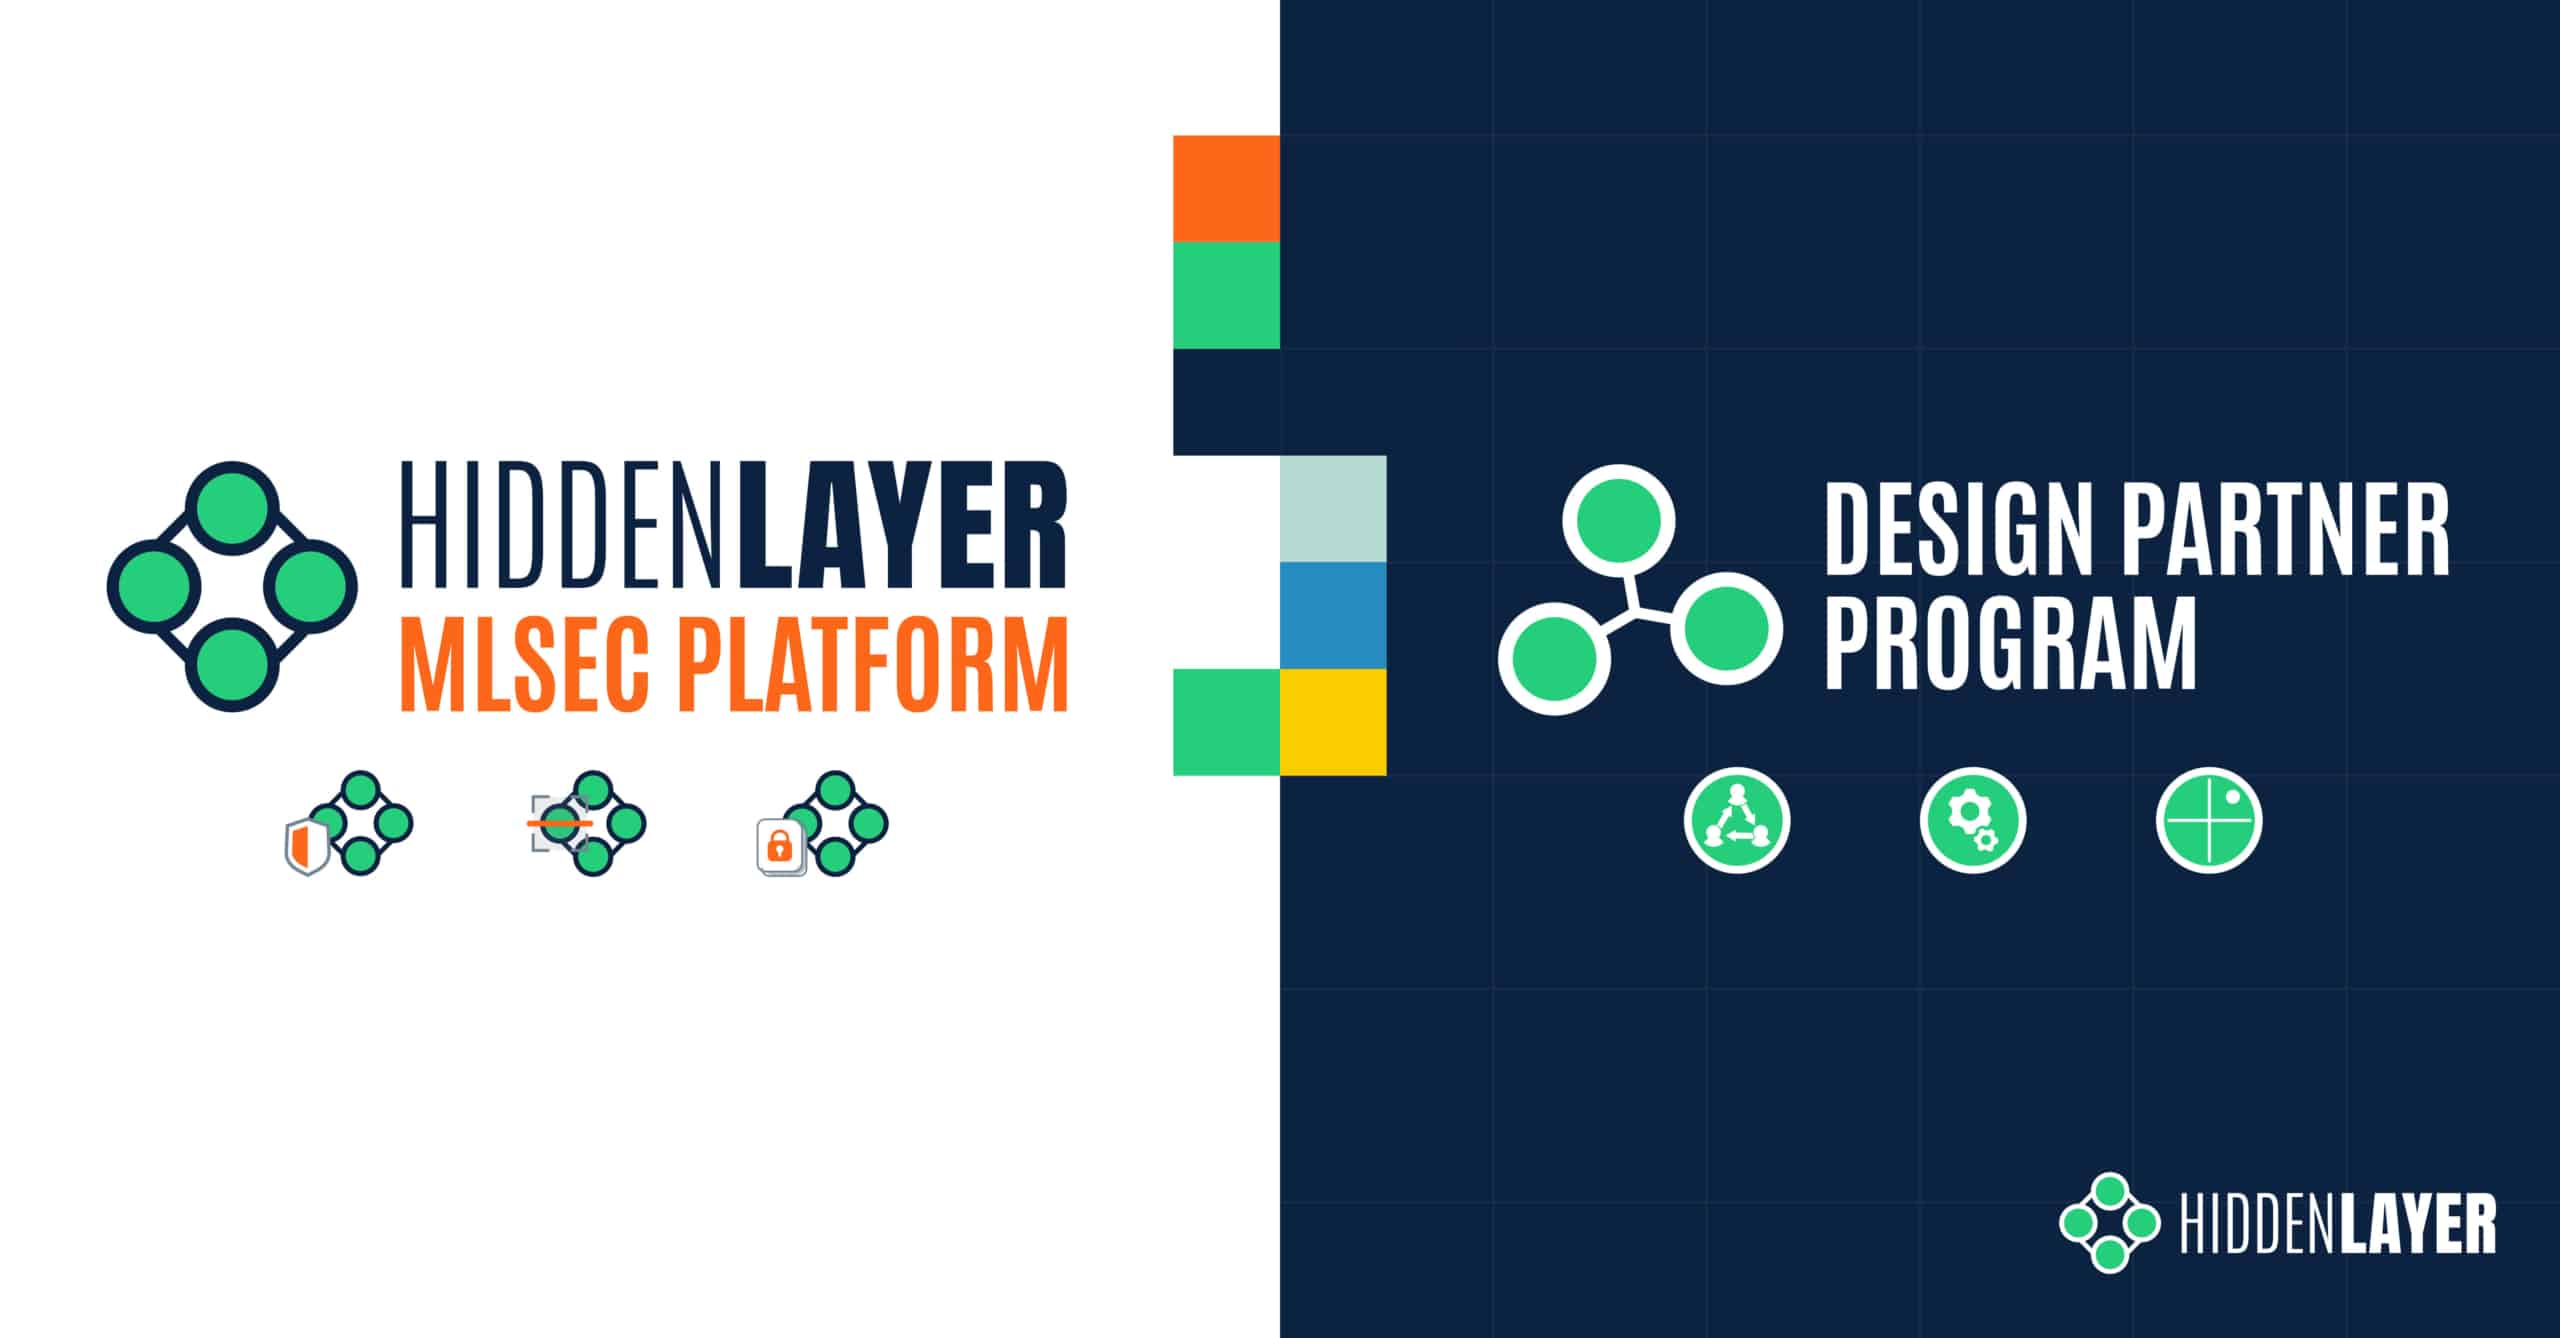 Announcing the new MLSec Platform and Design Partner Program